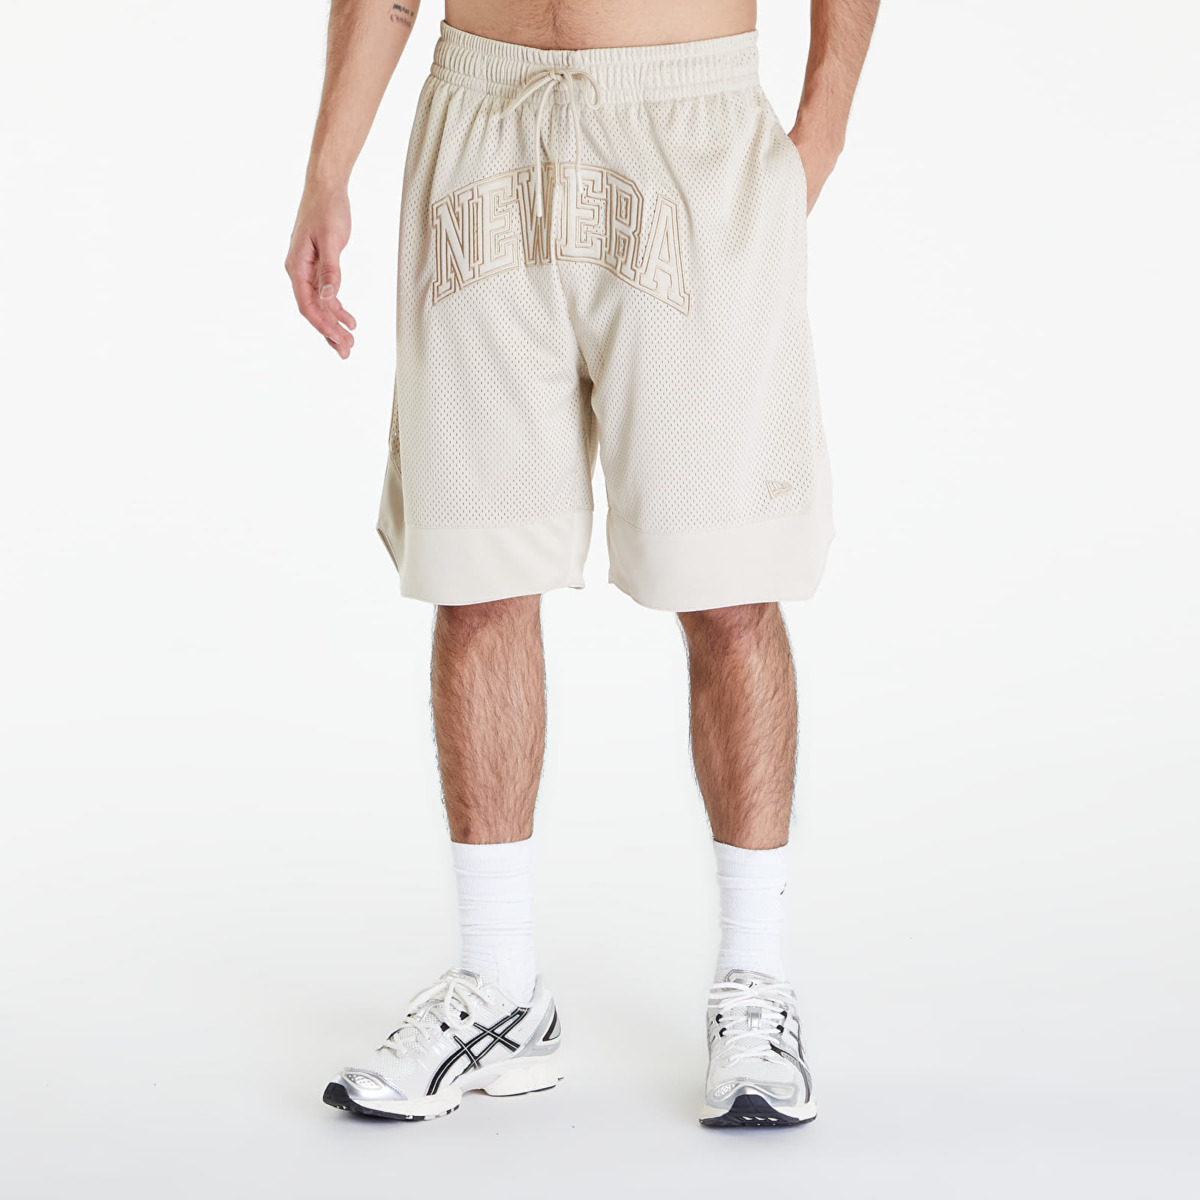 New Era Man Grey Shorts by Footshop GOOFASH